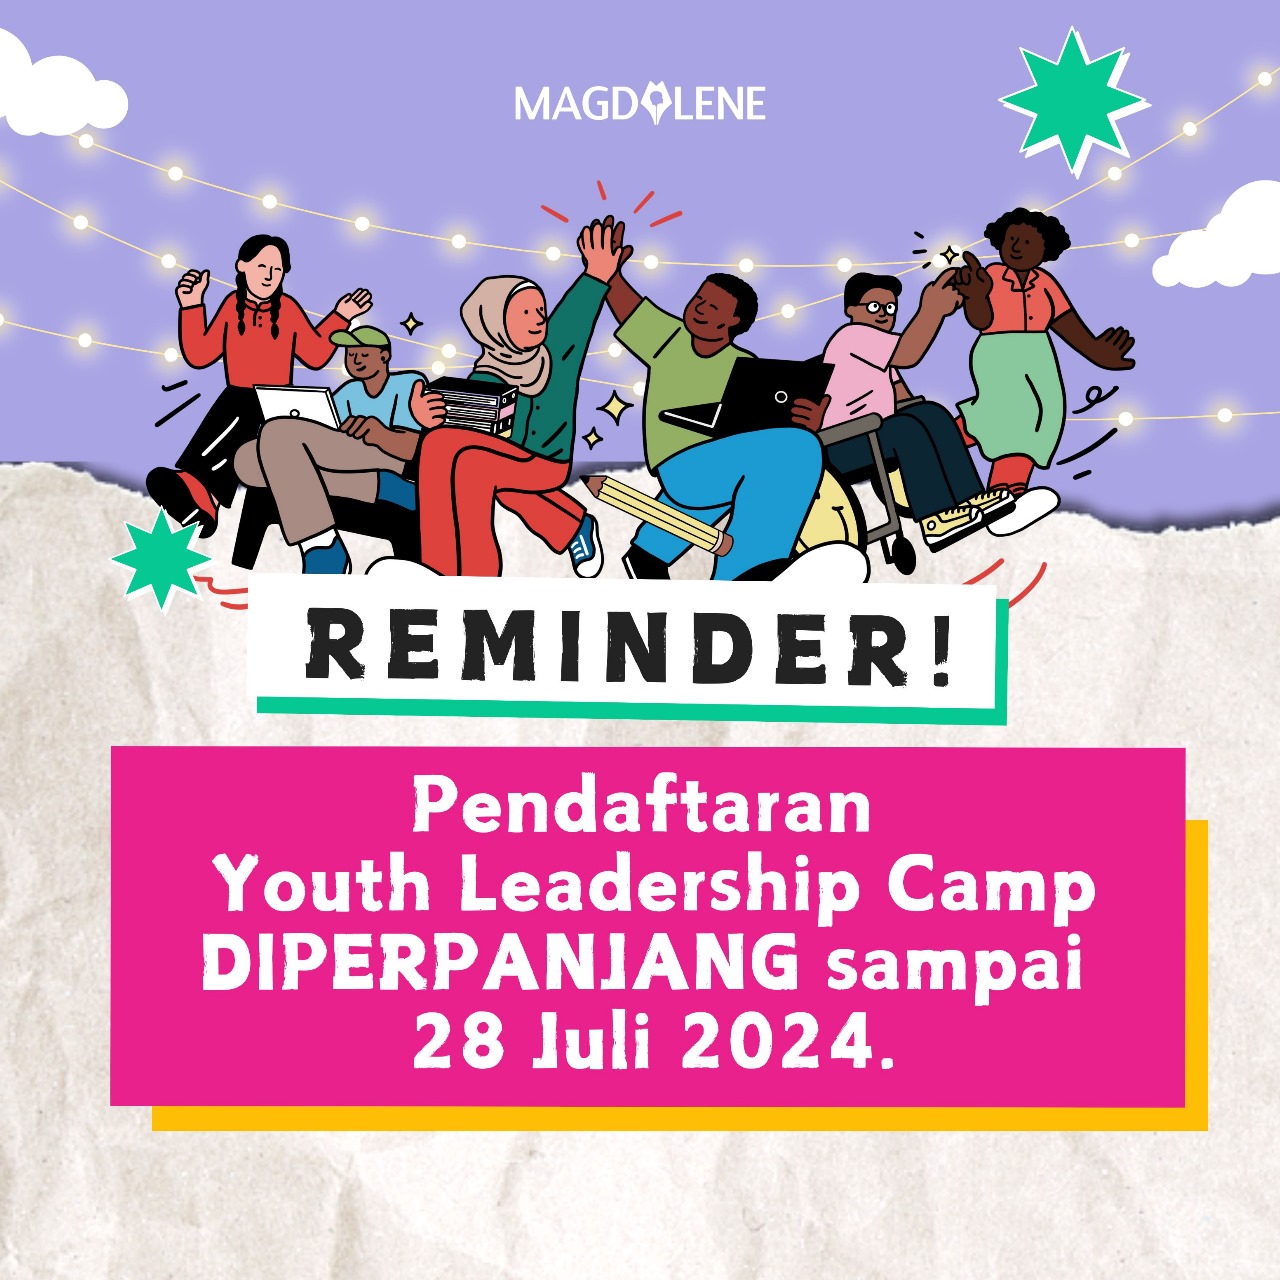 Youth Leadership Camp 2024 Kembali Diperpanjang!